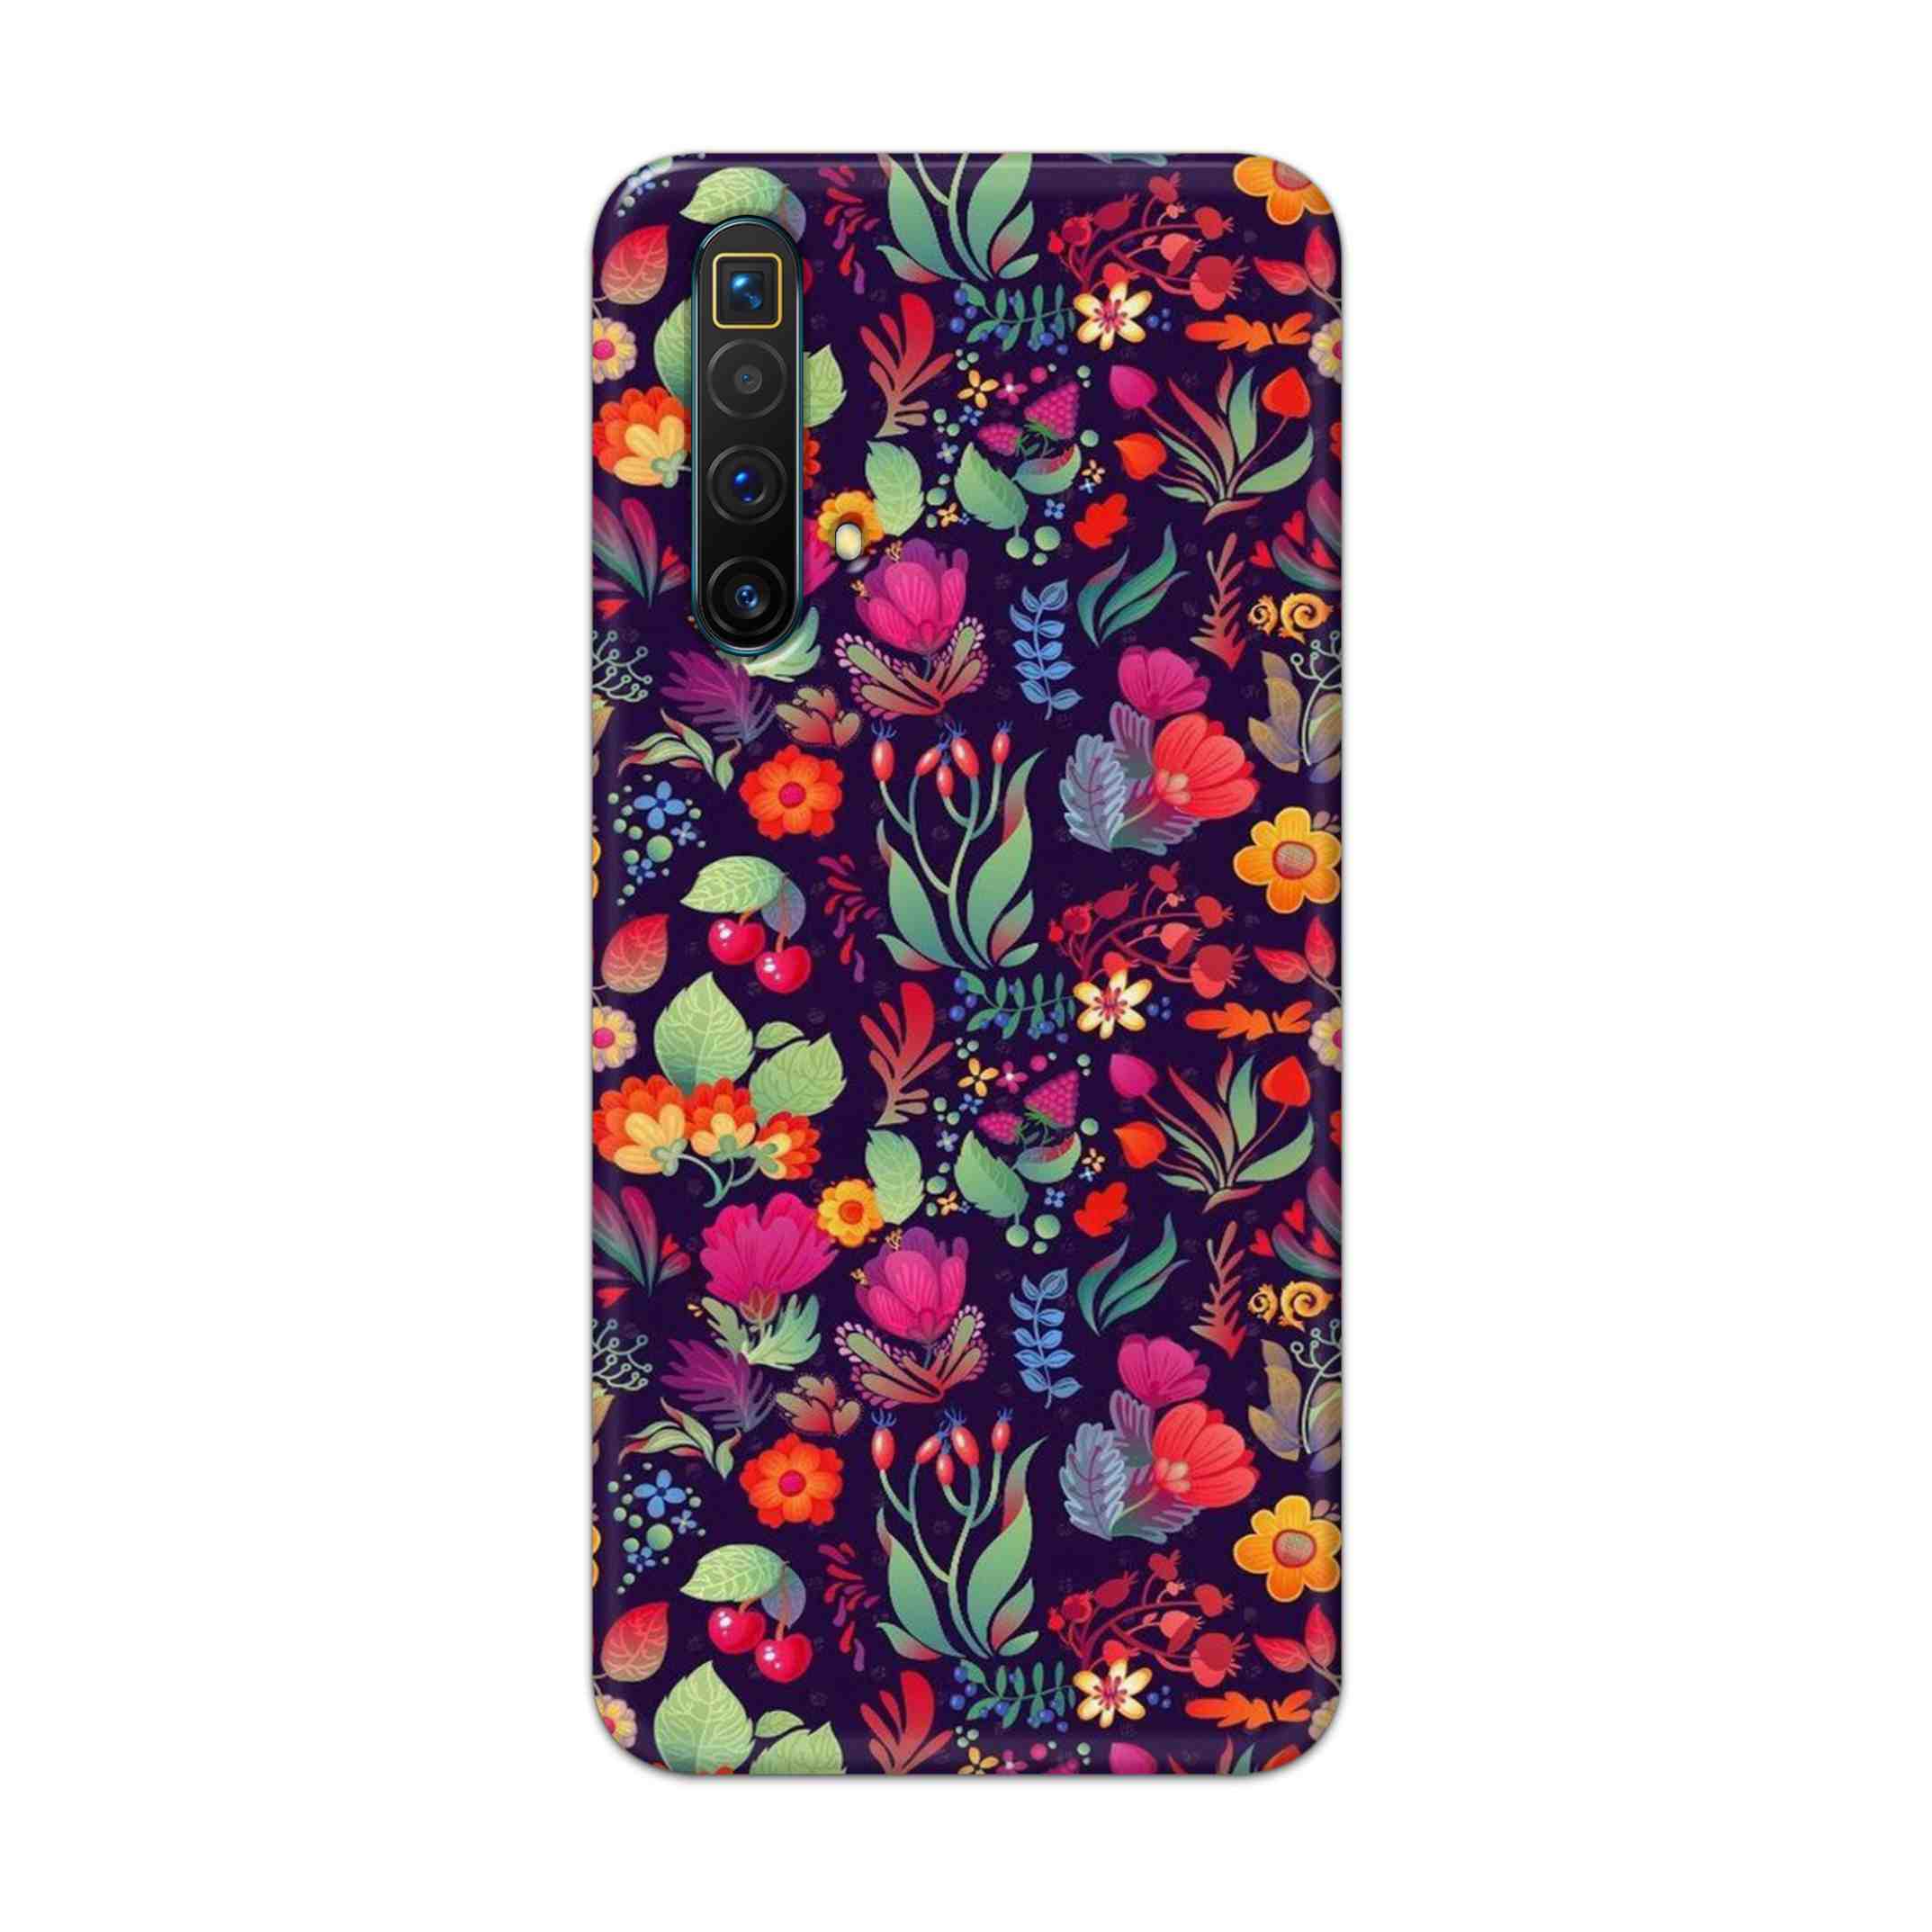 Buy Fruits Flower Hard Back Mobile Phone Case Cover For Realme X3 Superzoom Online